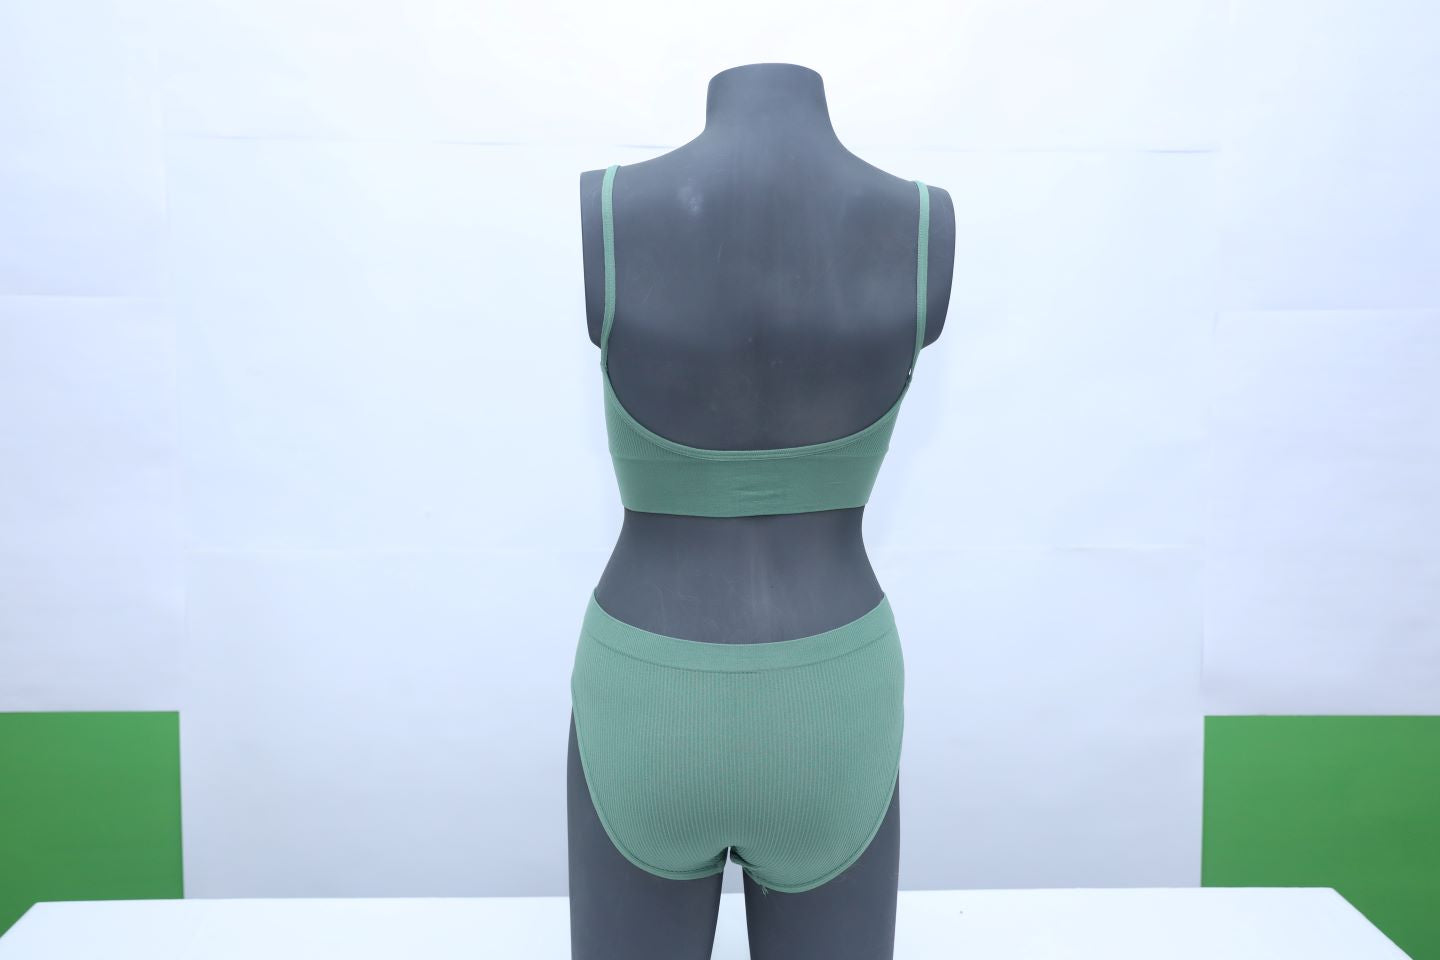 10010 - Breathable Nylon Girl's Lingerie Set - Seamless Comfort Push-Up Bra & Panty Set with Simplicity Design Premium One-Piece Underwear